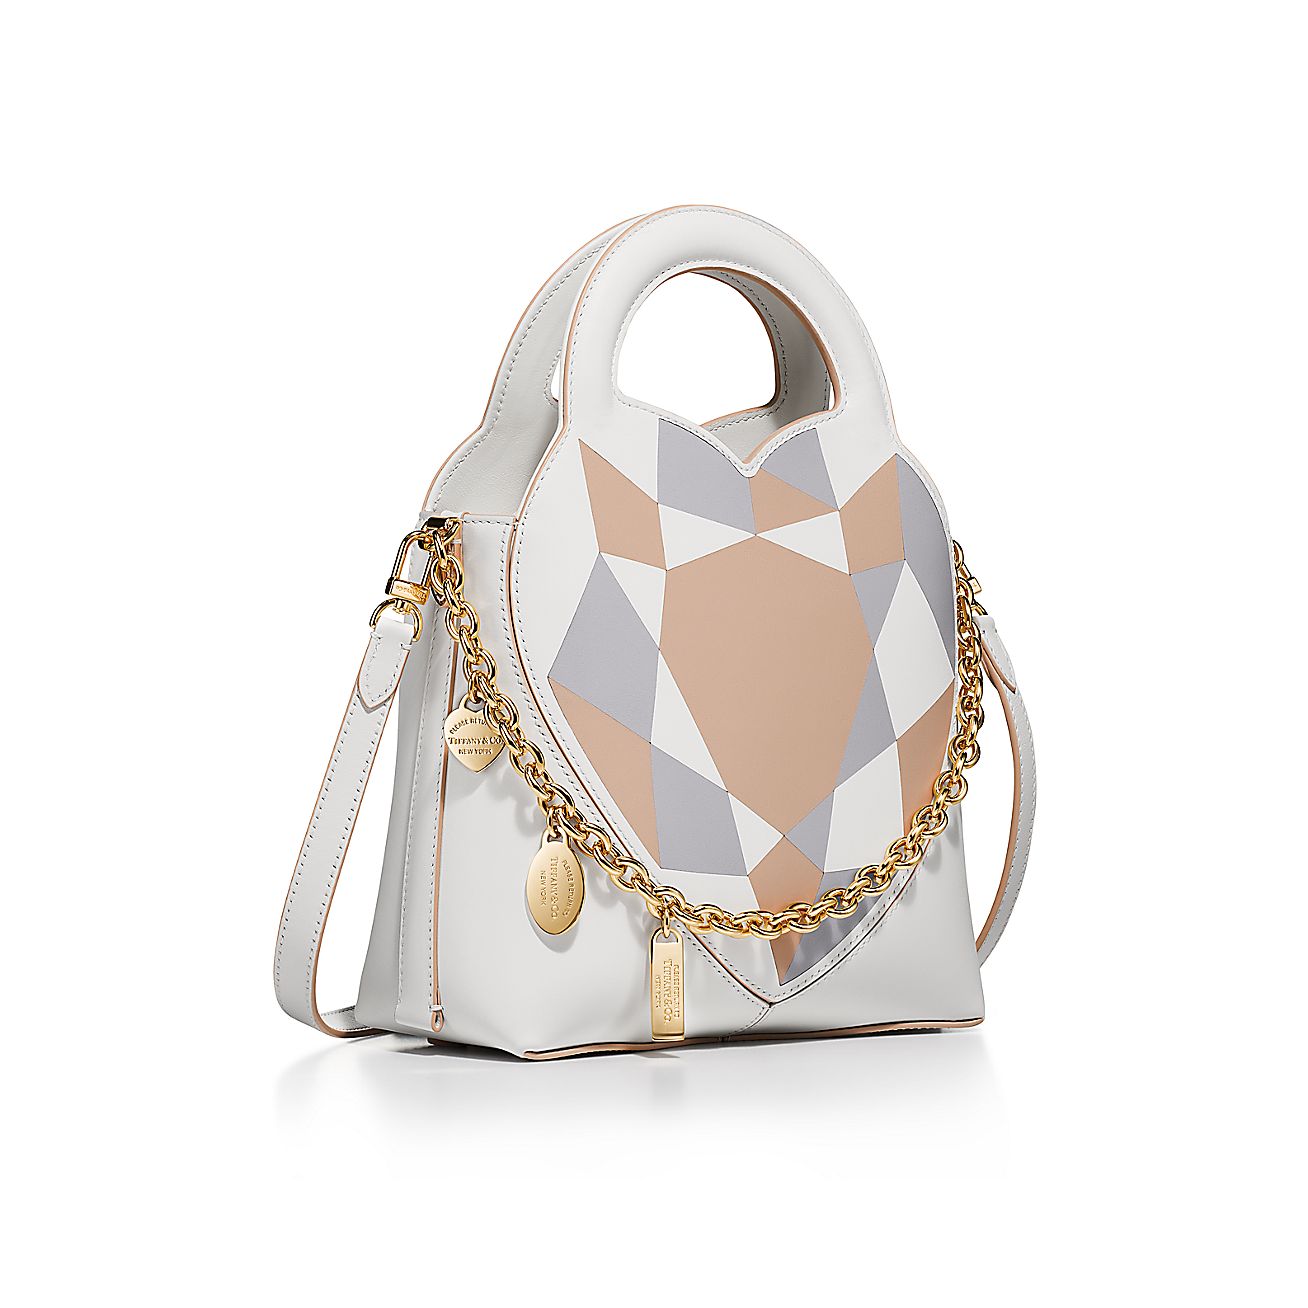 Paloma Picasso Leather Shoulder Bag - Neutrals Shoulder Bags